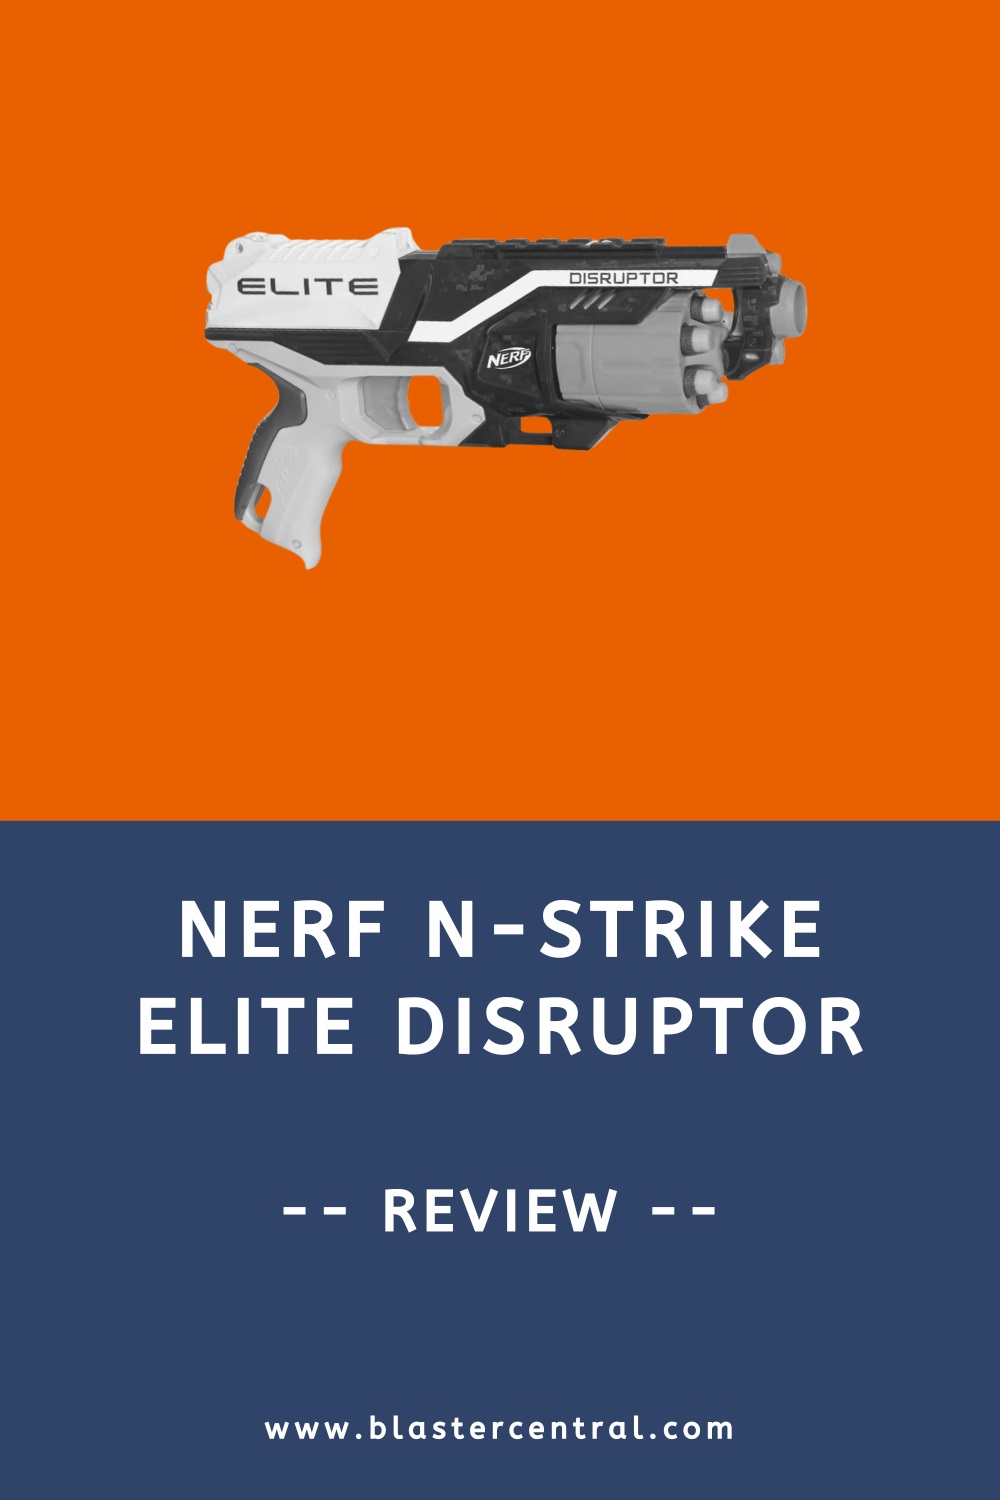 Review of the Nerf N-Strike Elite Disruptor